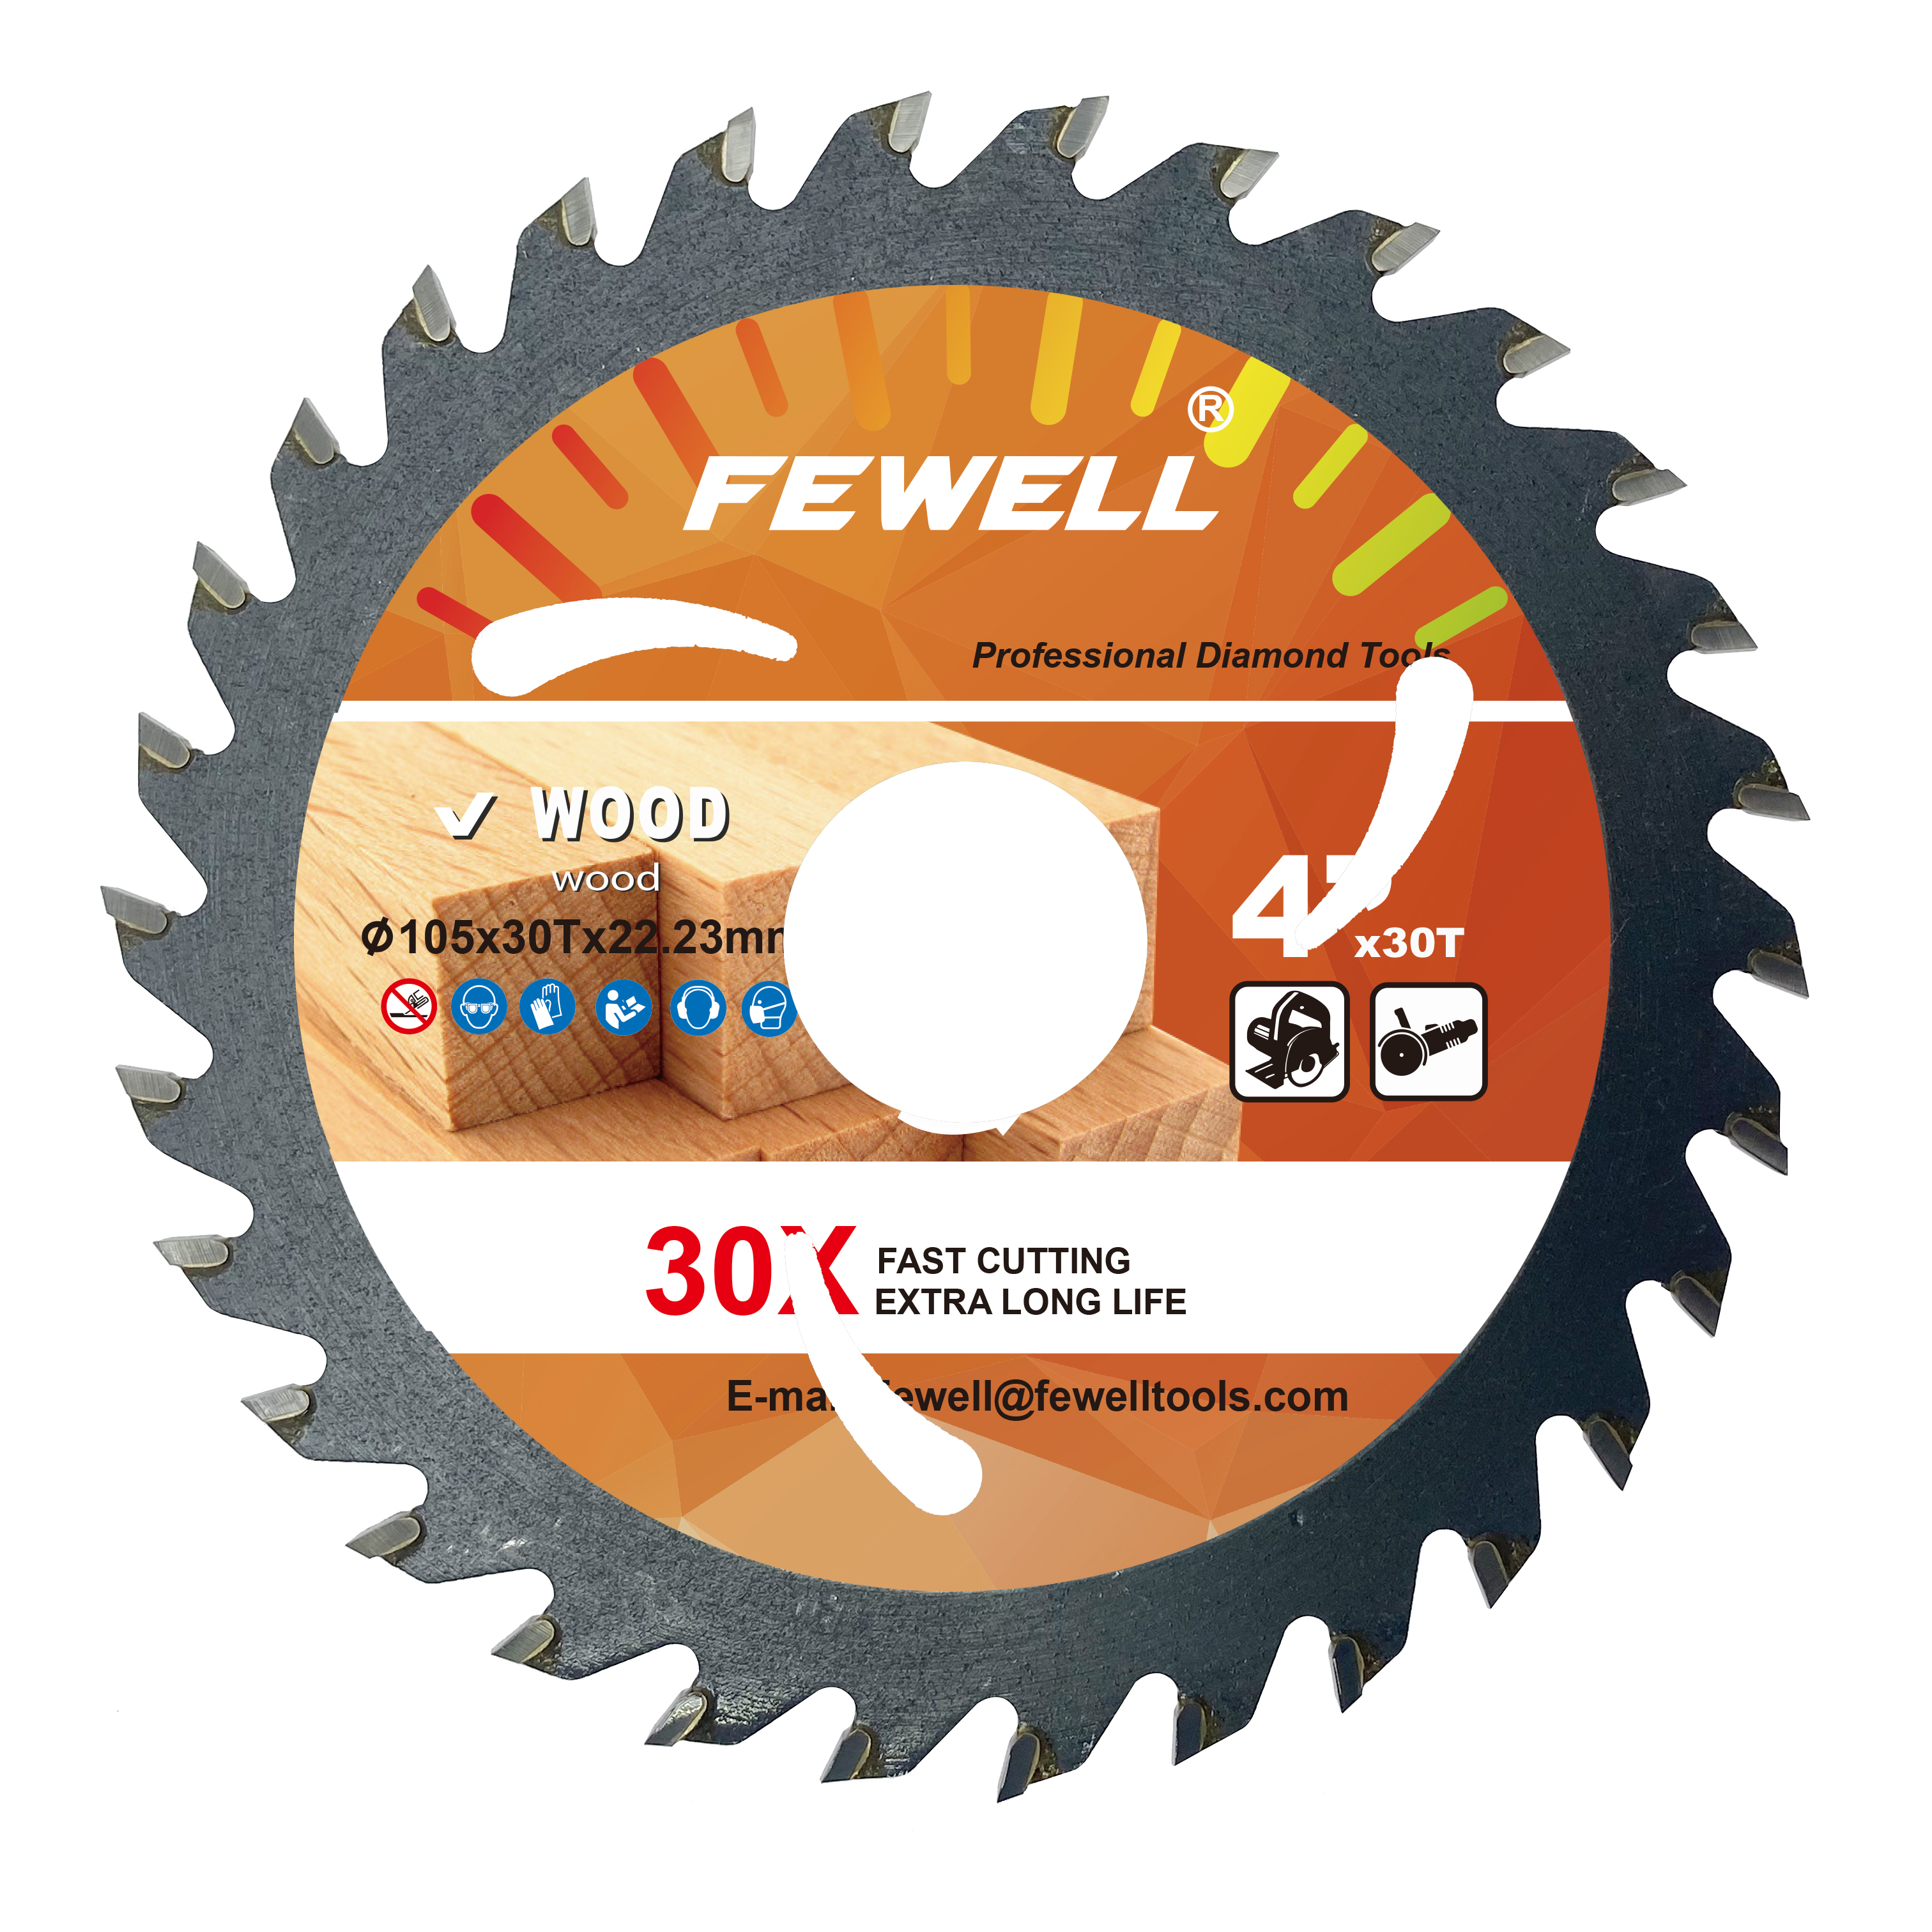 Hoja de sierra circular tct de 4 pulgadas 105*30T*22,23mm para cortar madera